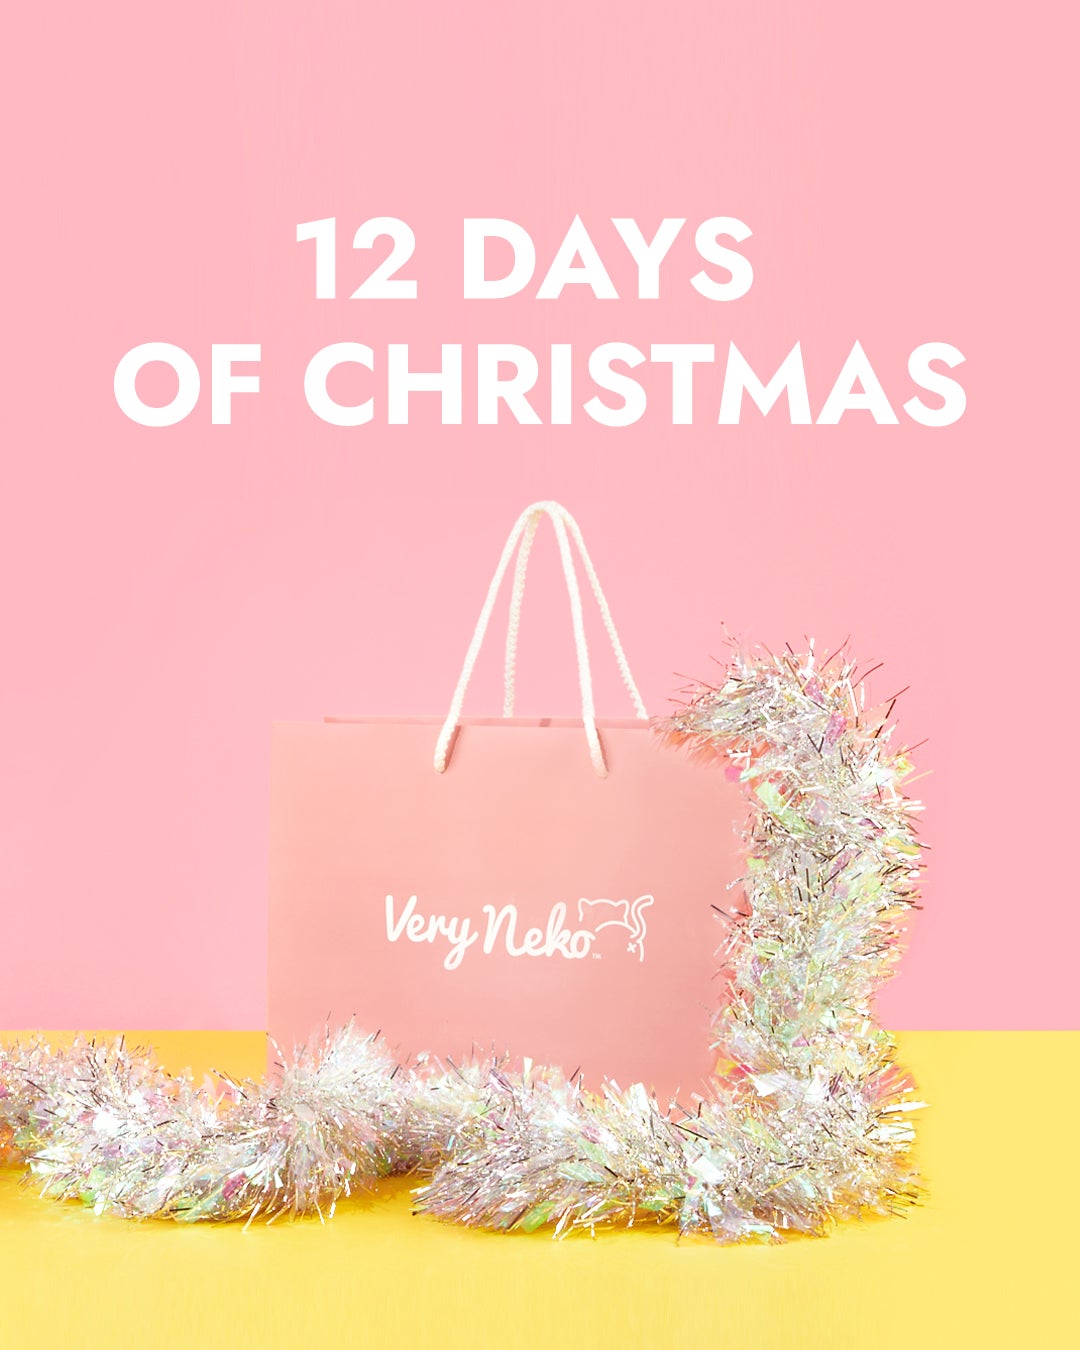 12 days of Christmas at VeryNeko